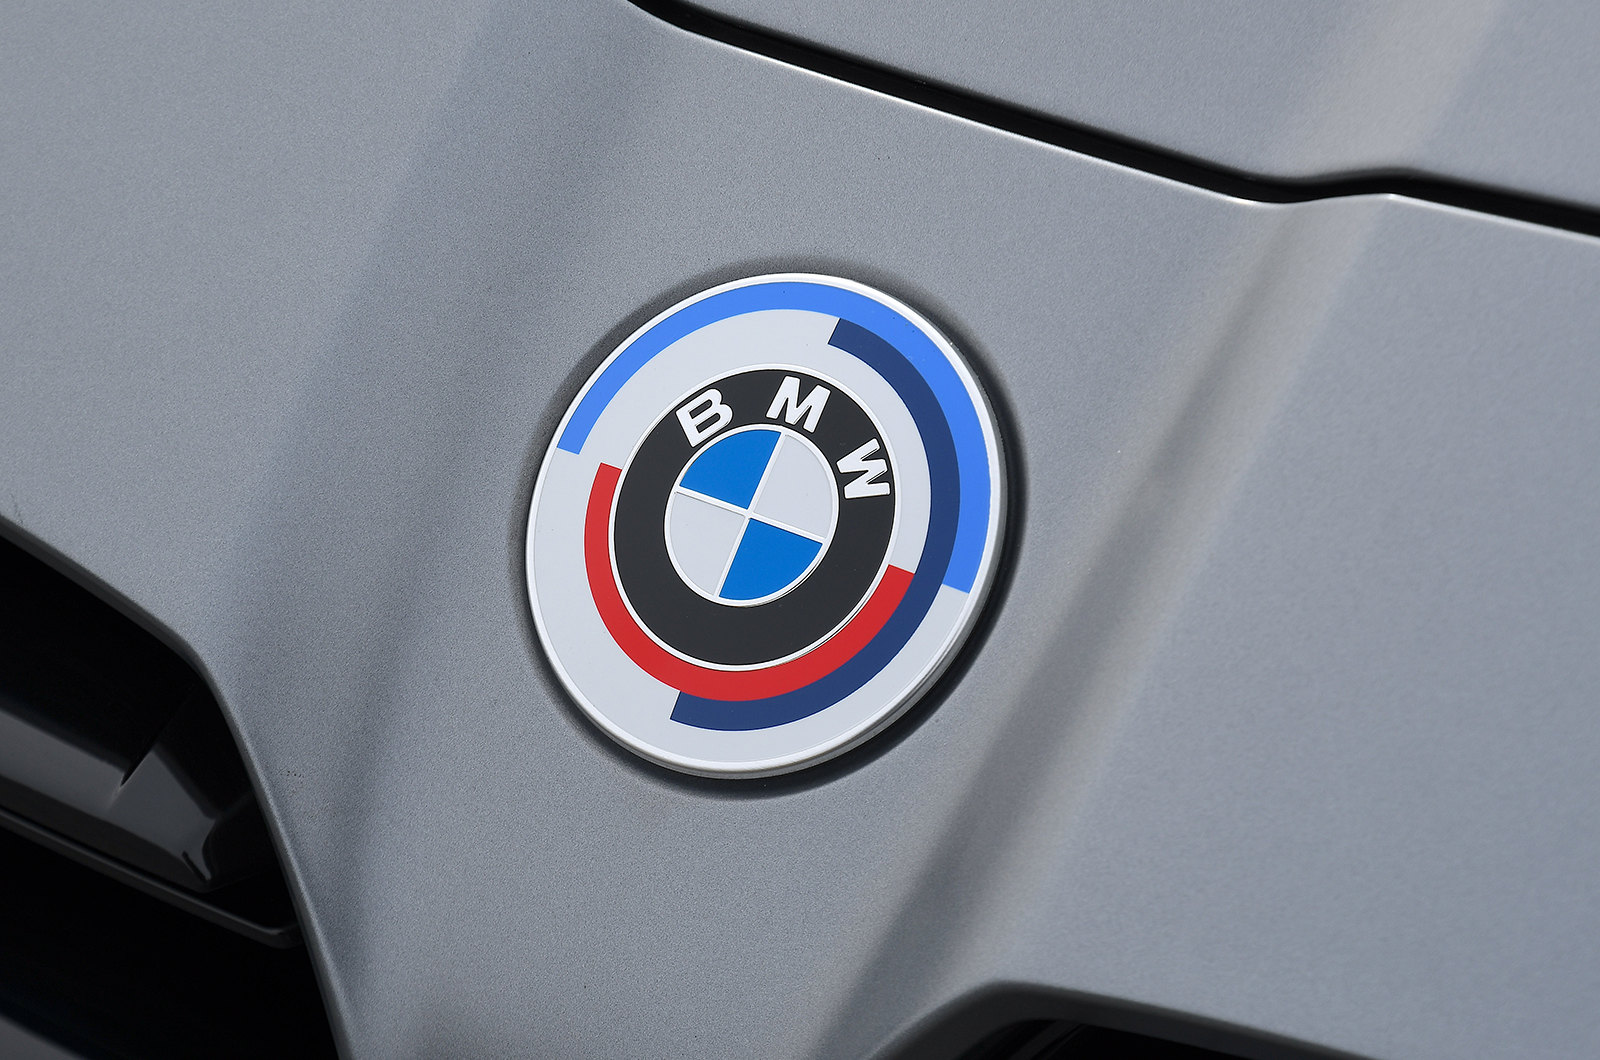 Classic & Sports Car – Future classic: BMW M3 Touring